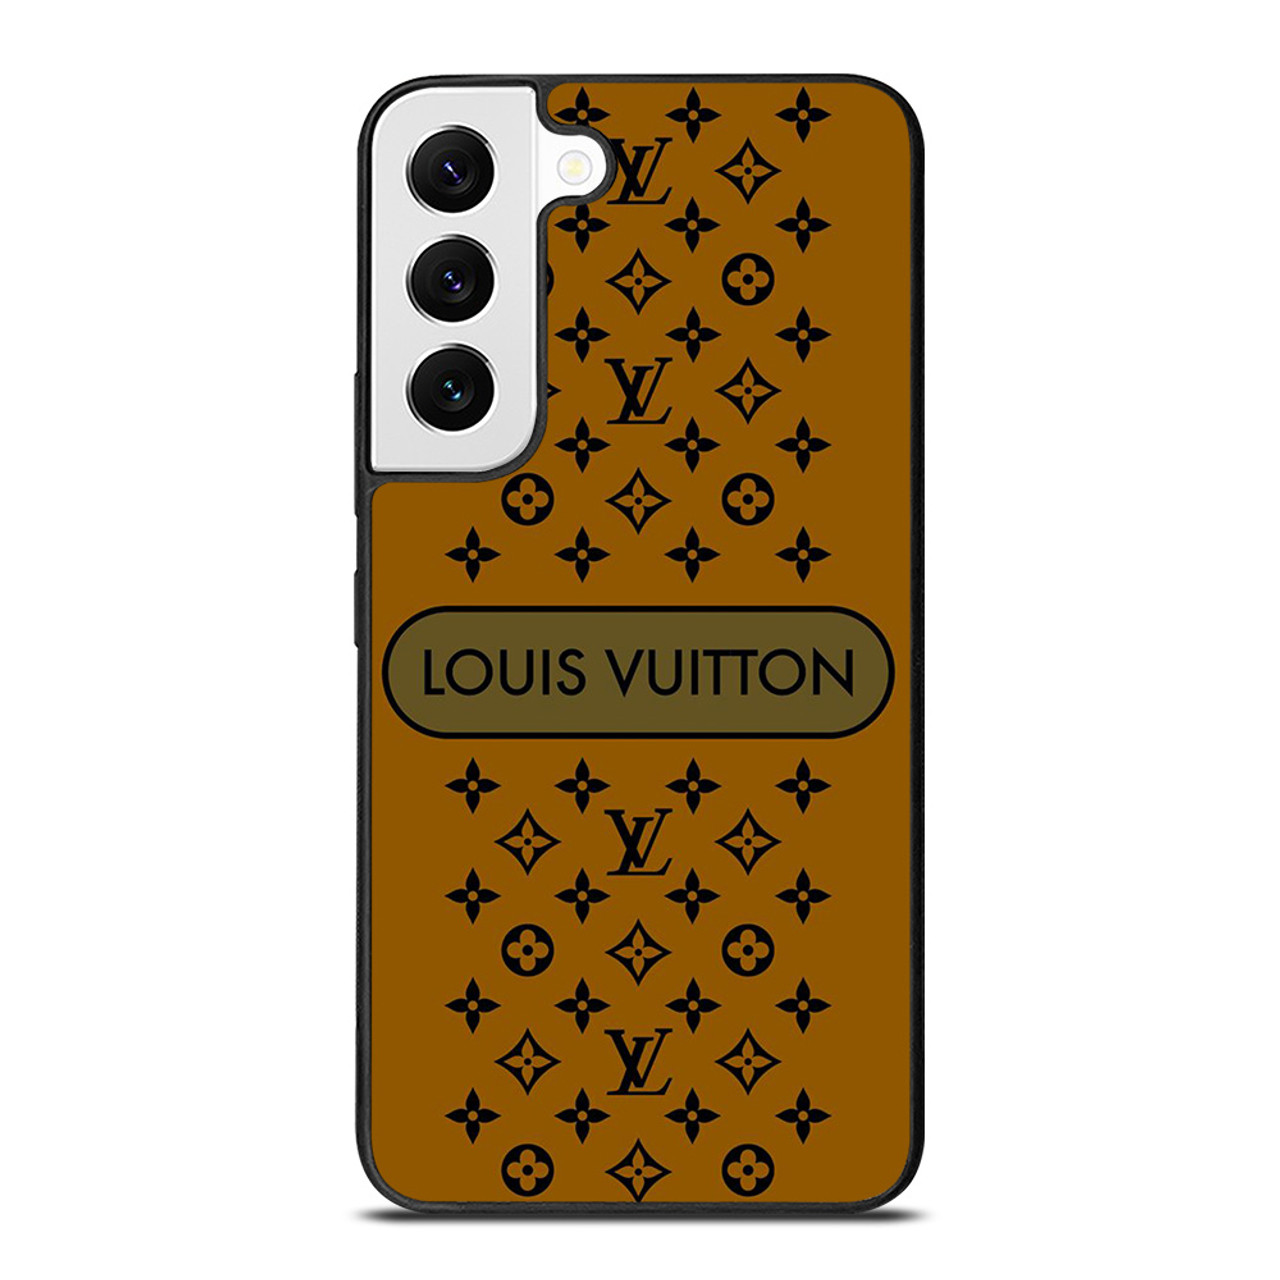 LOUIS VUITTON PATTERN LV Samsung Galaxy S21 Ultra Case Cover